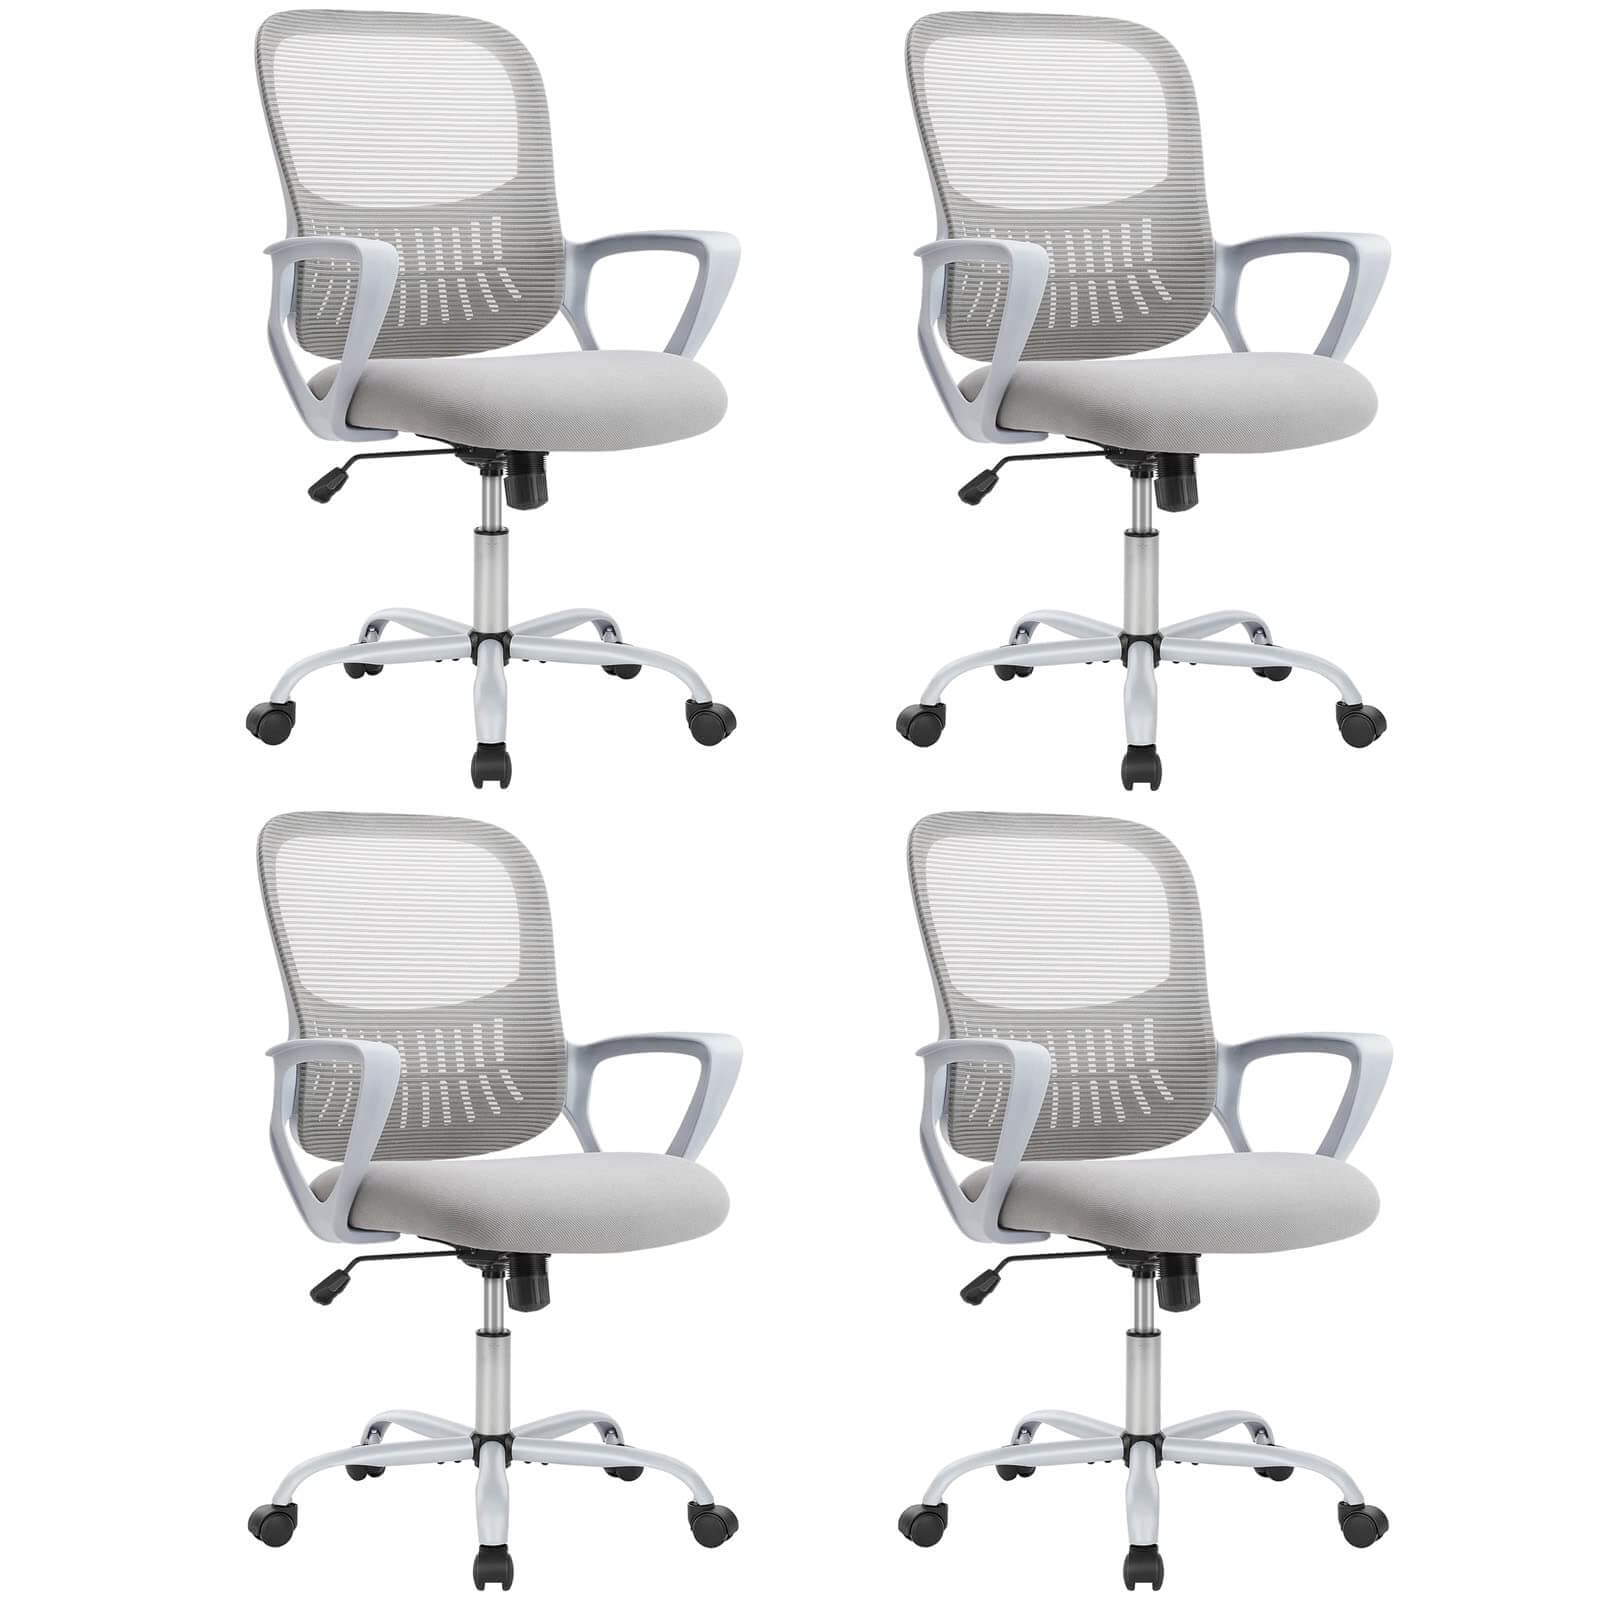 office-chair-ergonomic#Quantity_4 Chair#Color_Grey